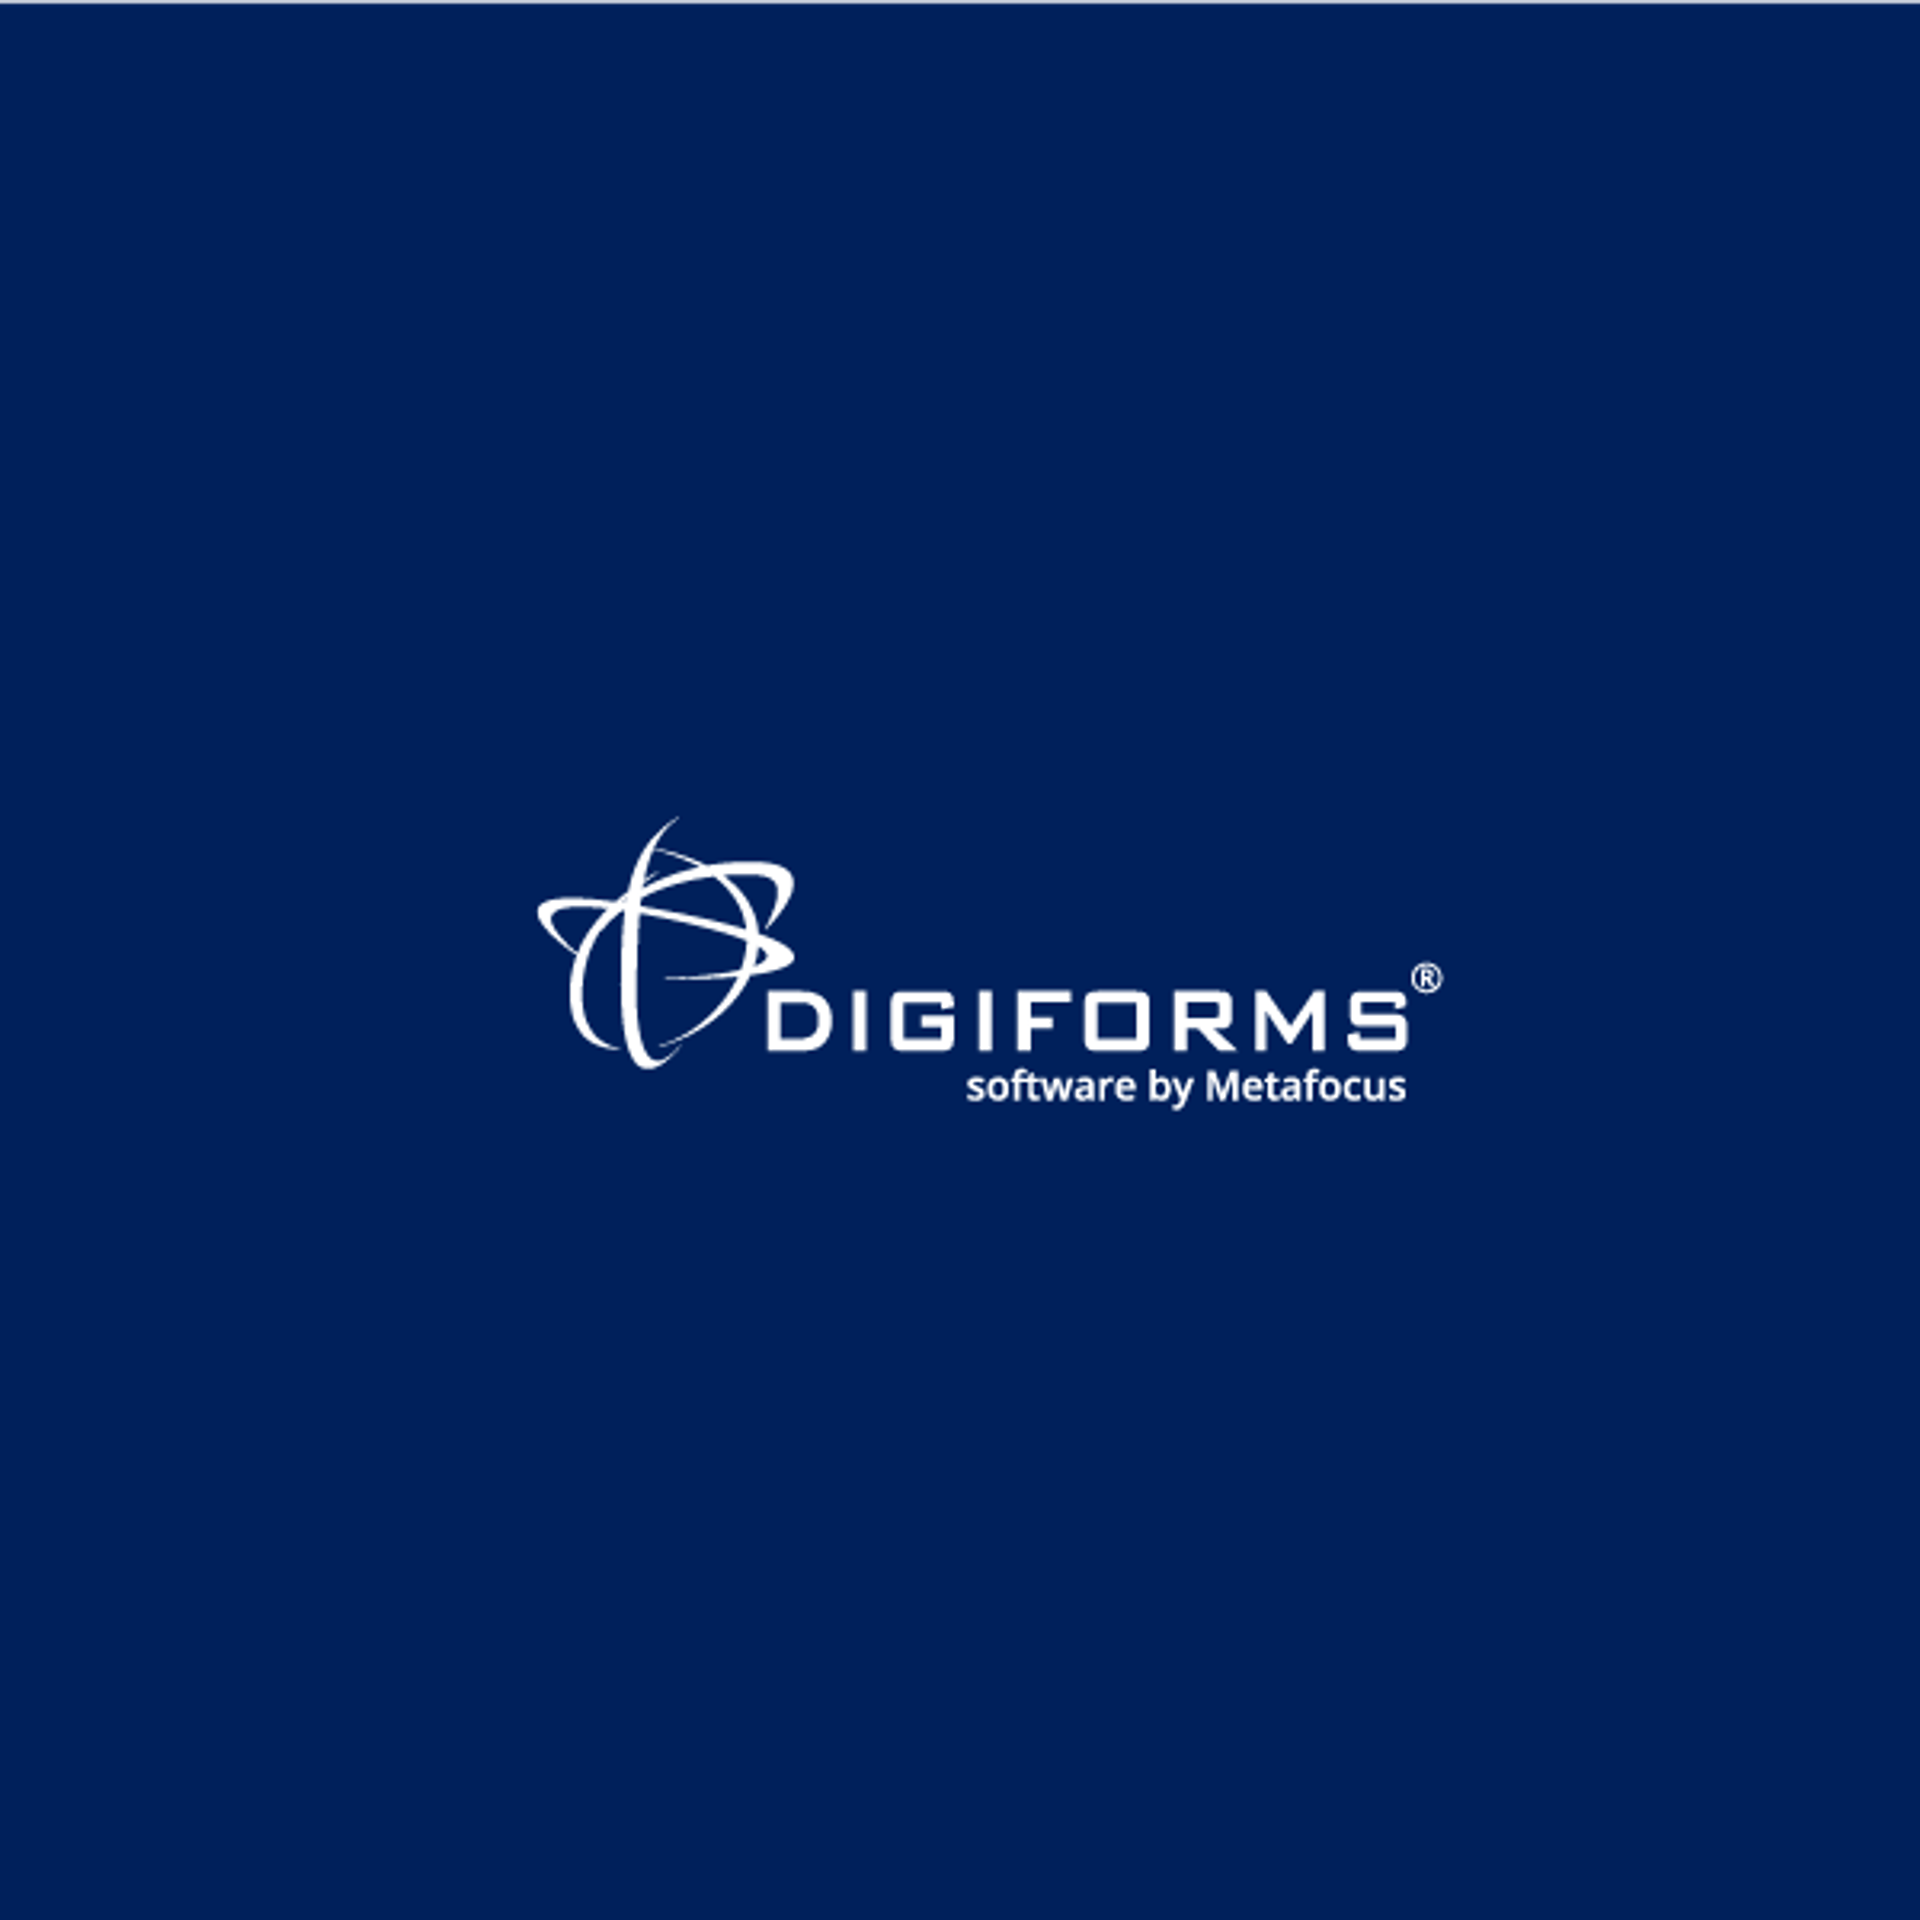 Digiform logo